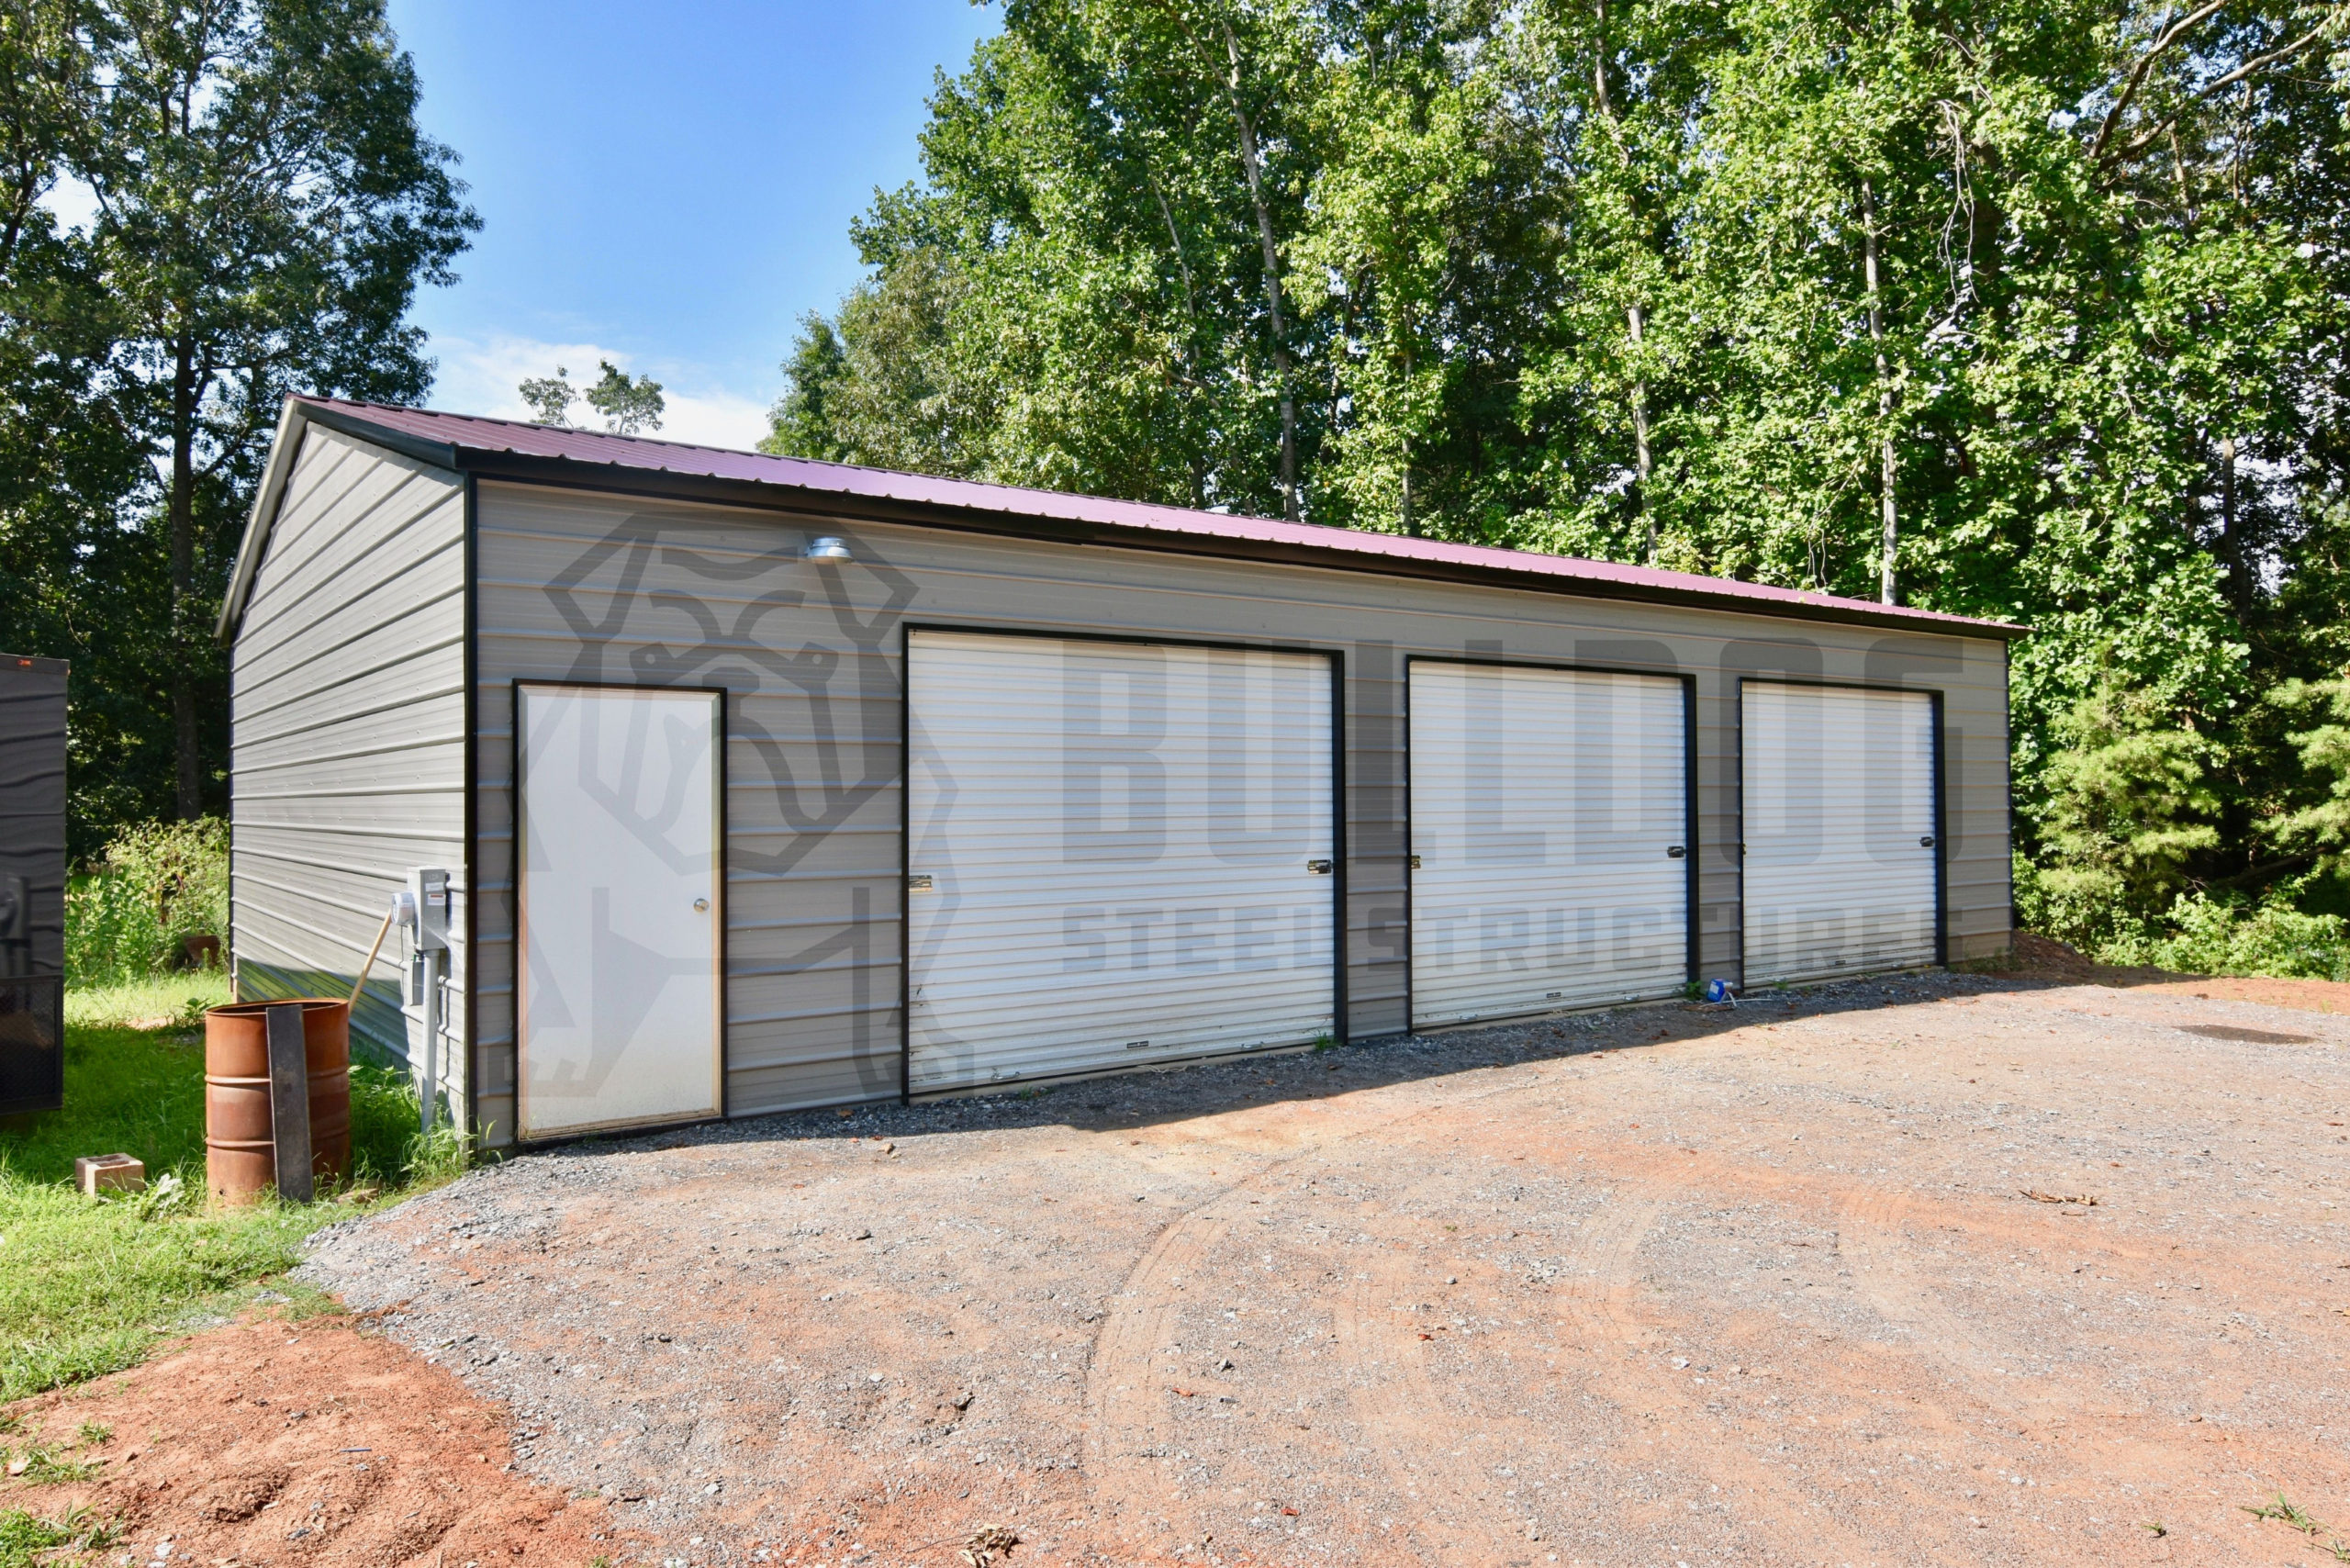 Three-car garage with gray siding